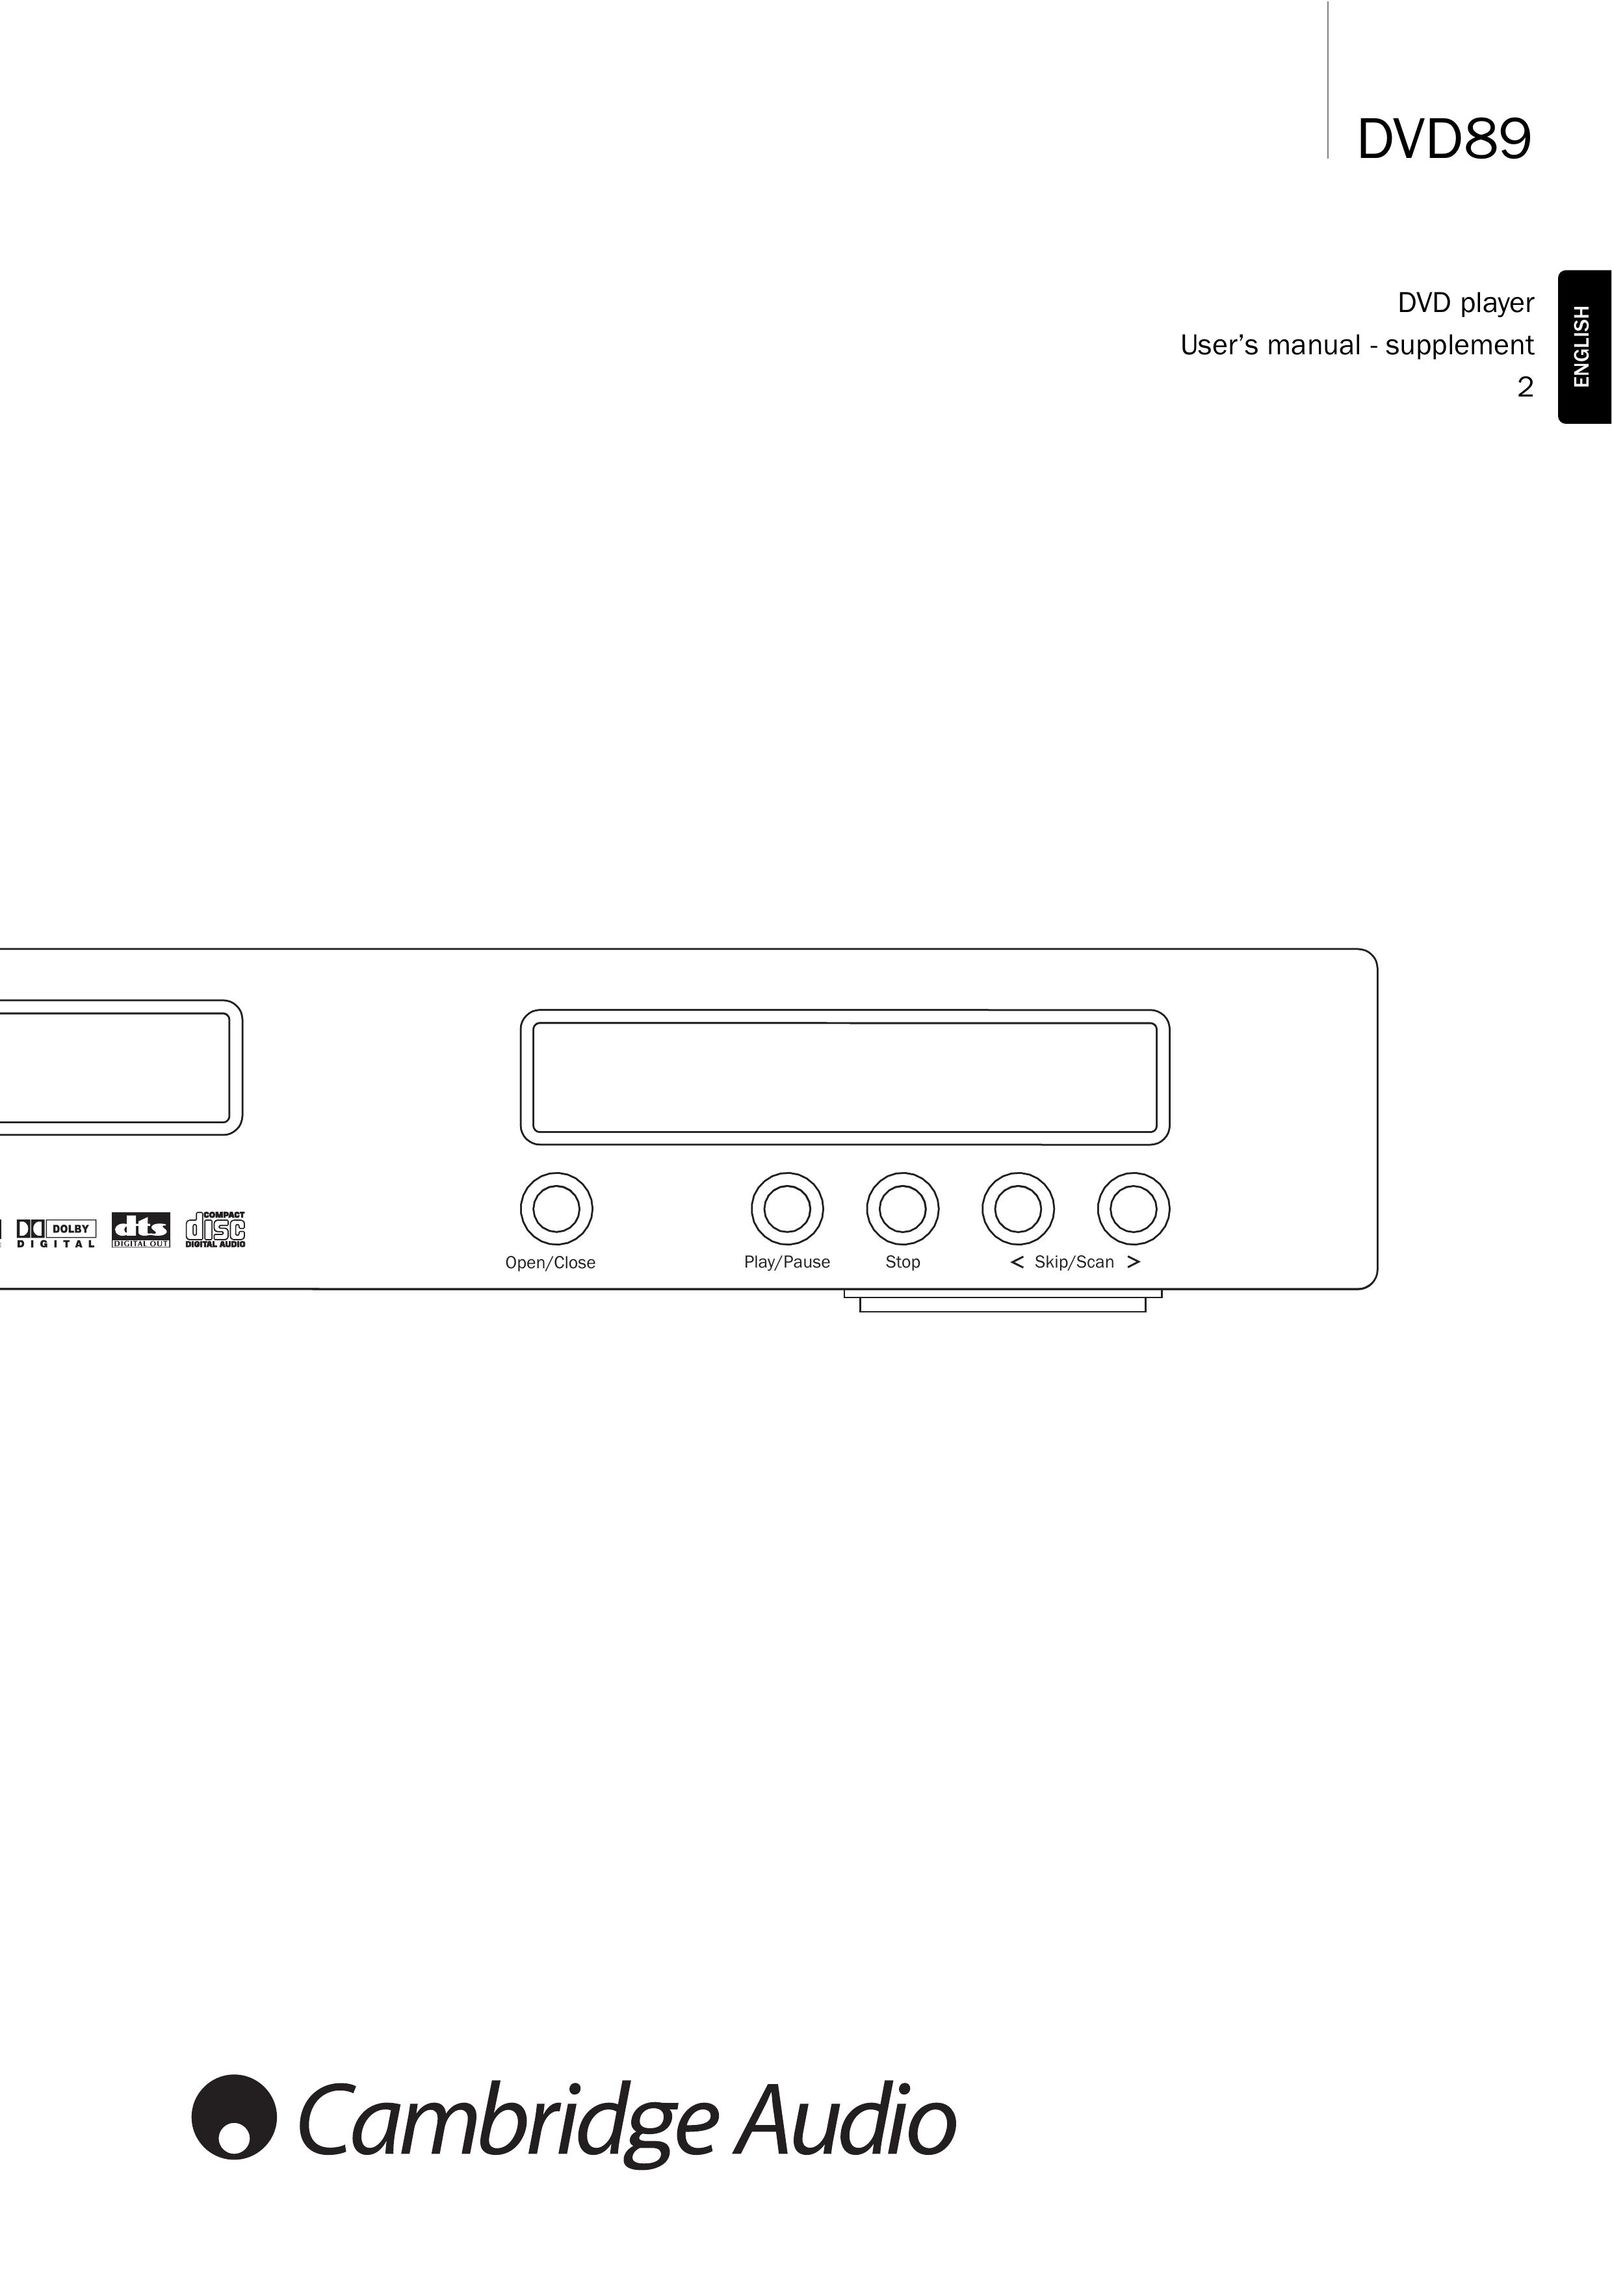 Cambridge Audio DVD89 DVD Player User Manual